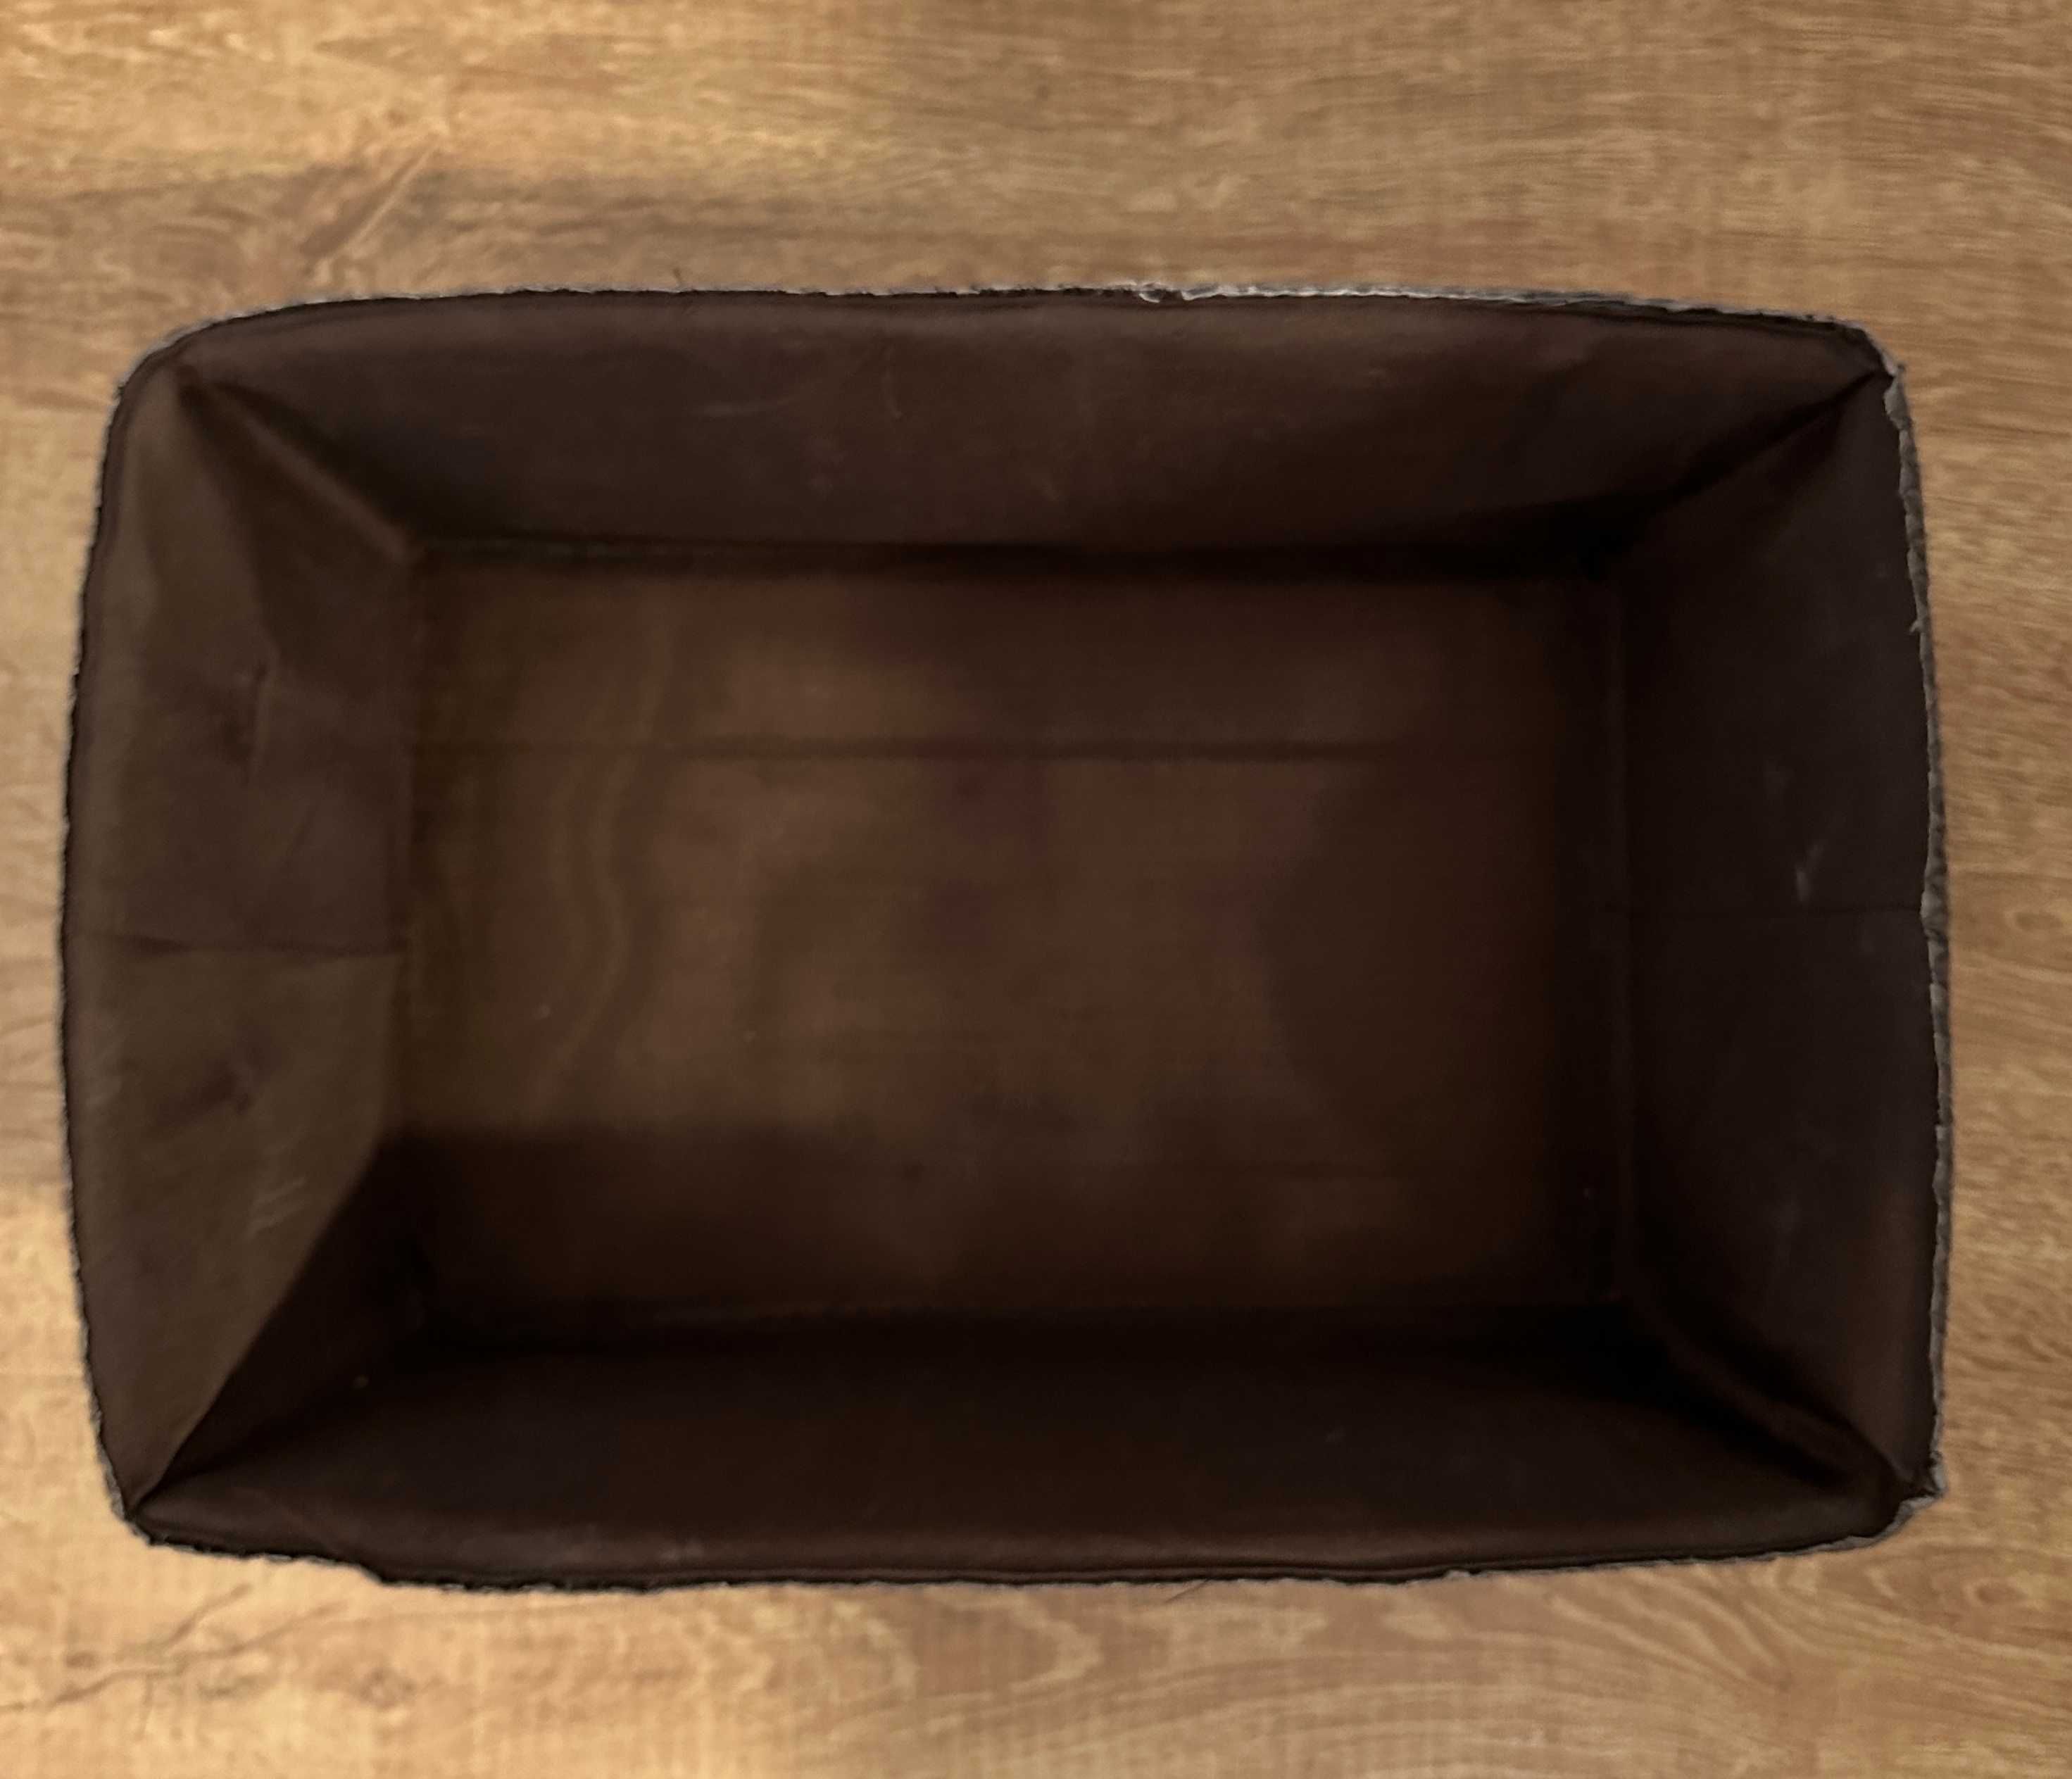 Ящик, коробка с крышкой из бамбука и корзины